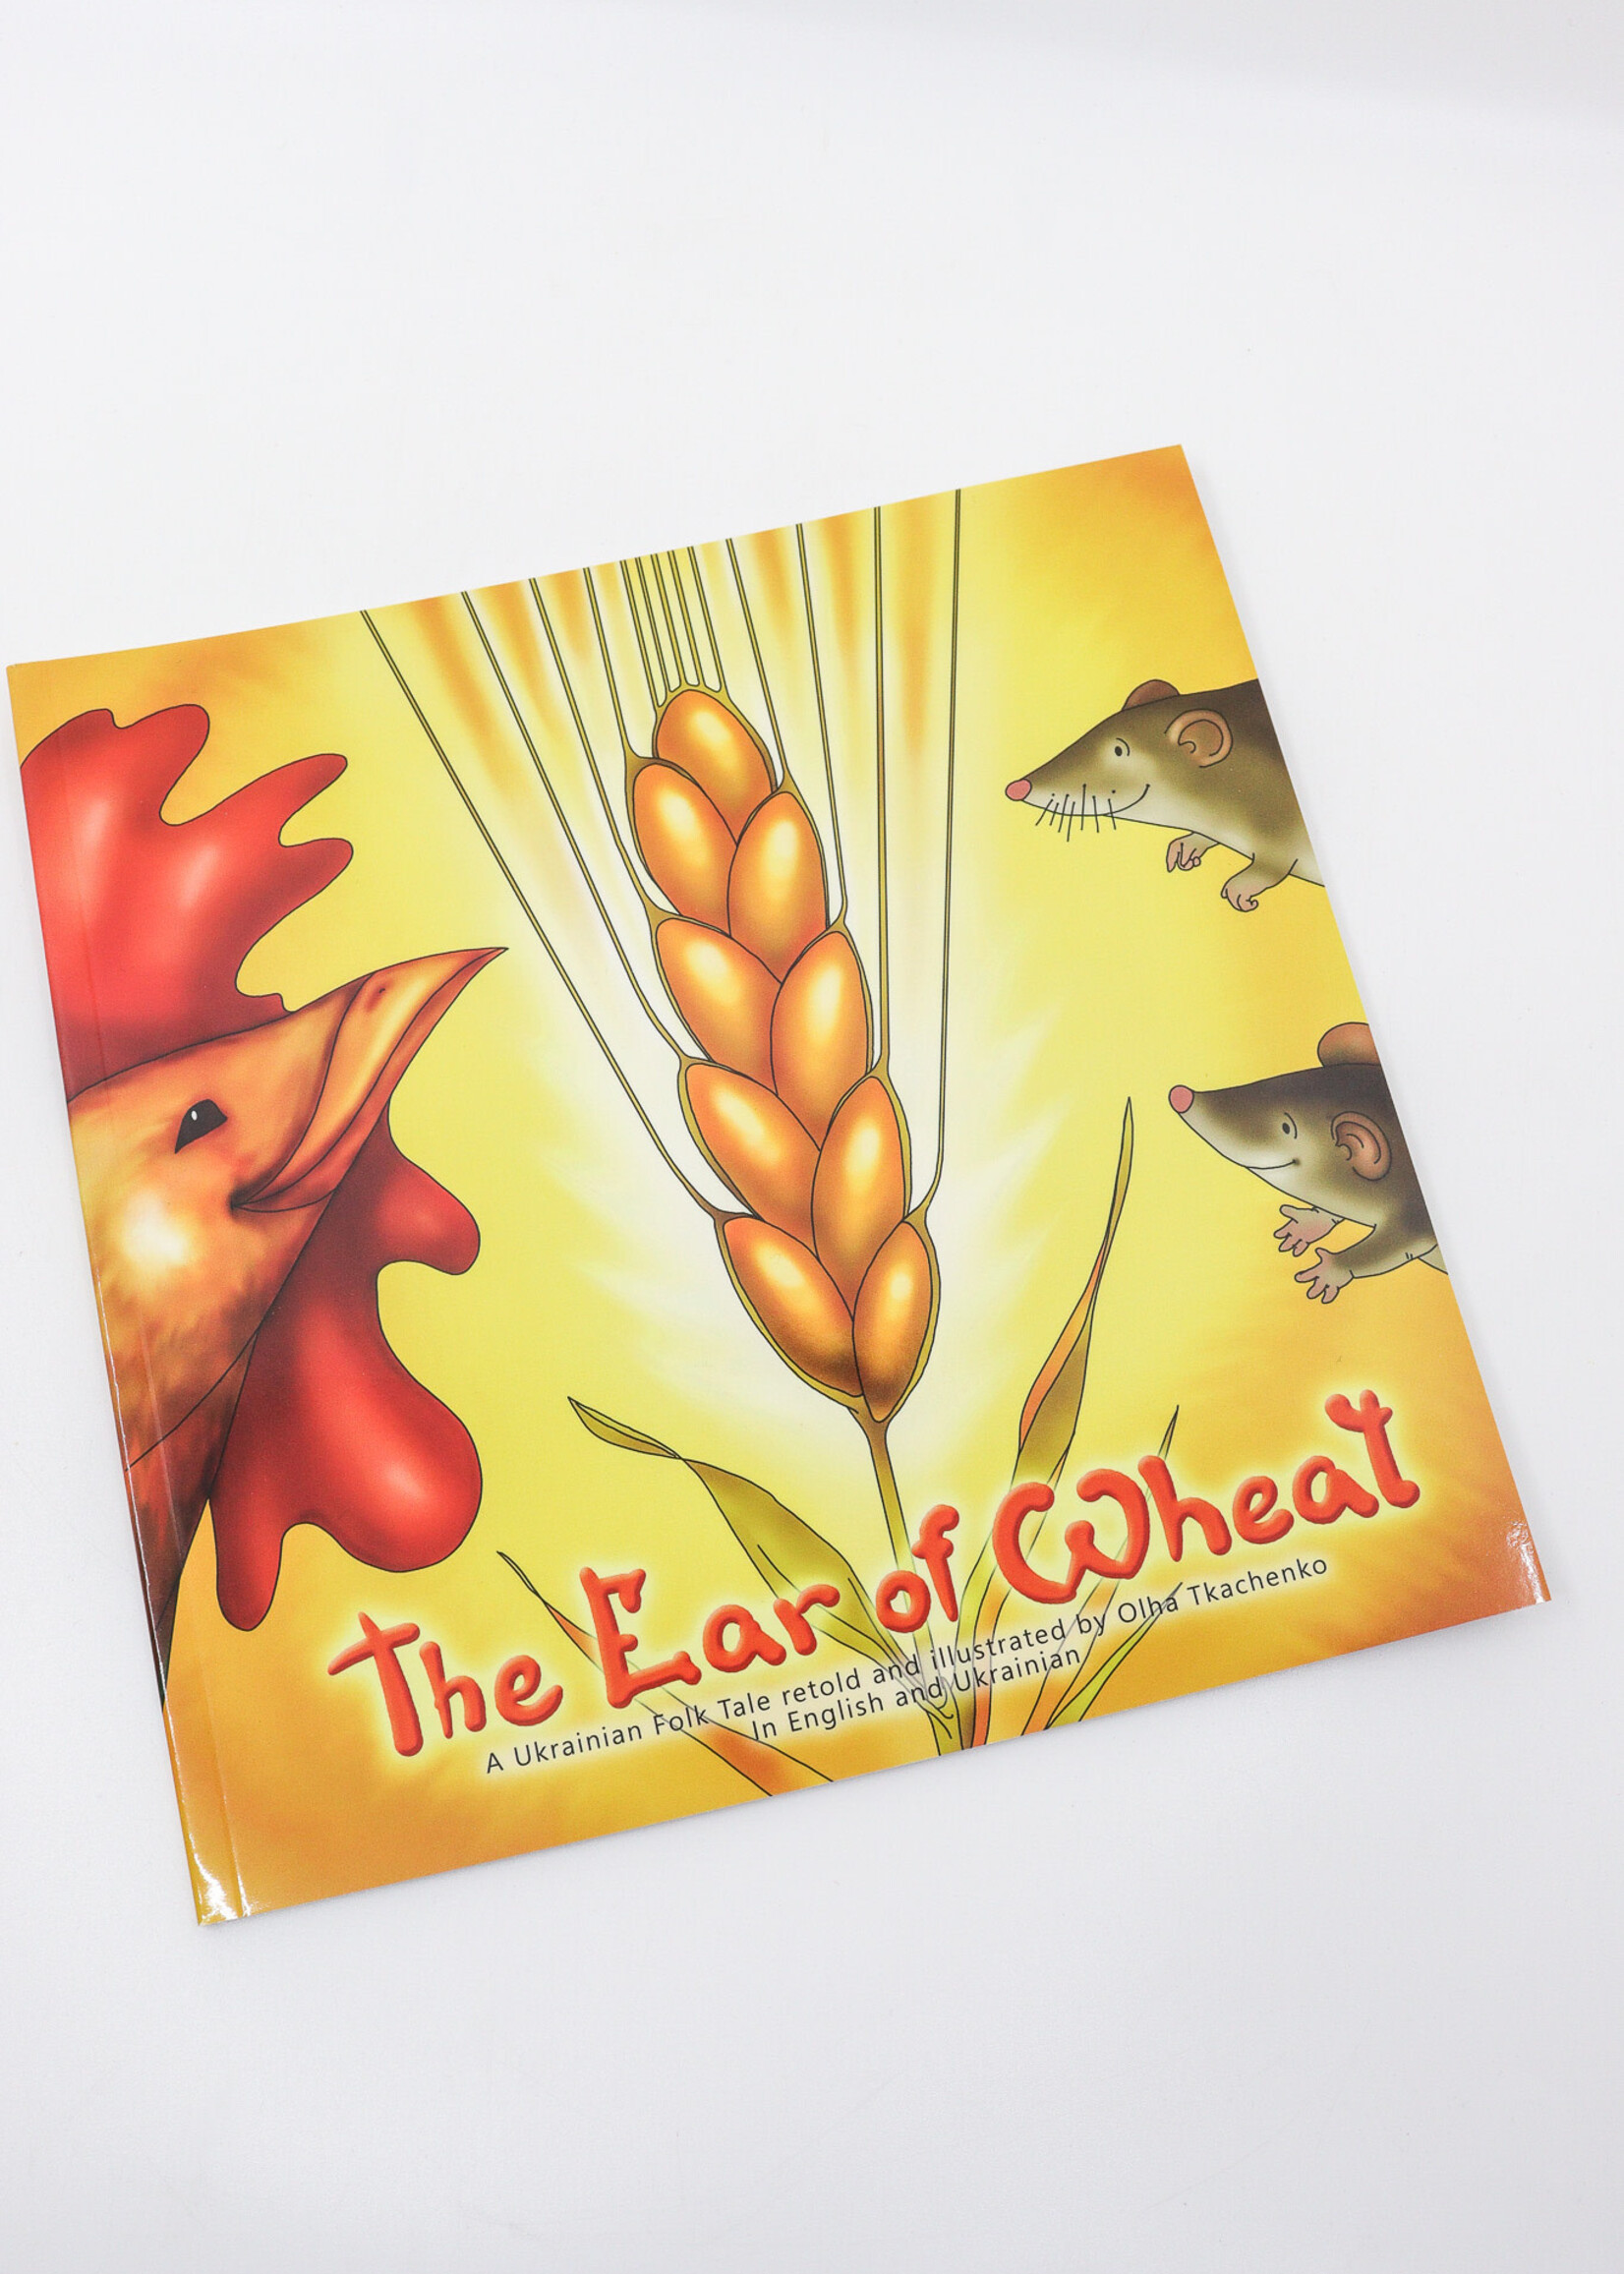 BOOK - Kids "-The Ear of Wheat", A Ukrainian Folk Tale, Retold and Illustrated by Olha Tkachenko in English/ Ukrainian